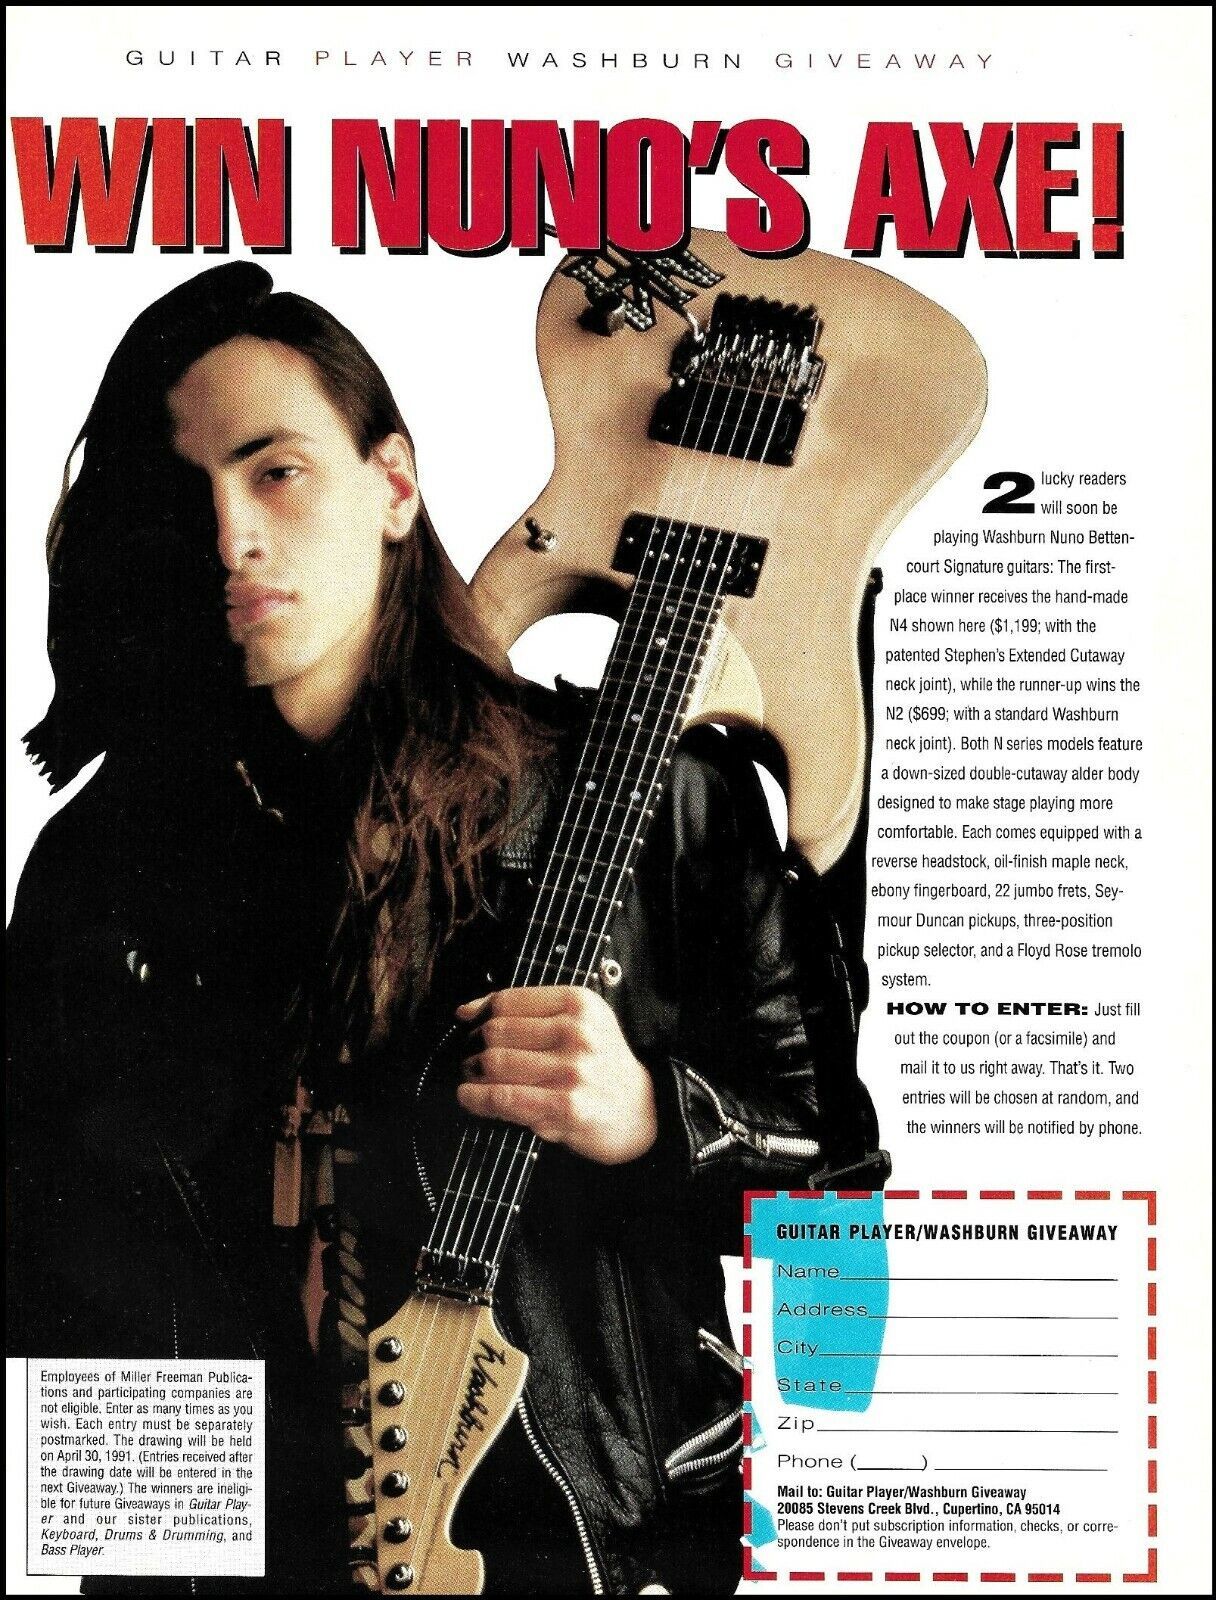 Extreme Nuno Bettencourt Washburn N4 guitar 1991 contest entry form ad print - $4.23